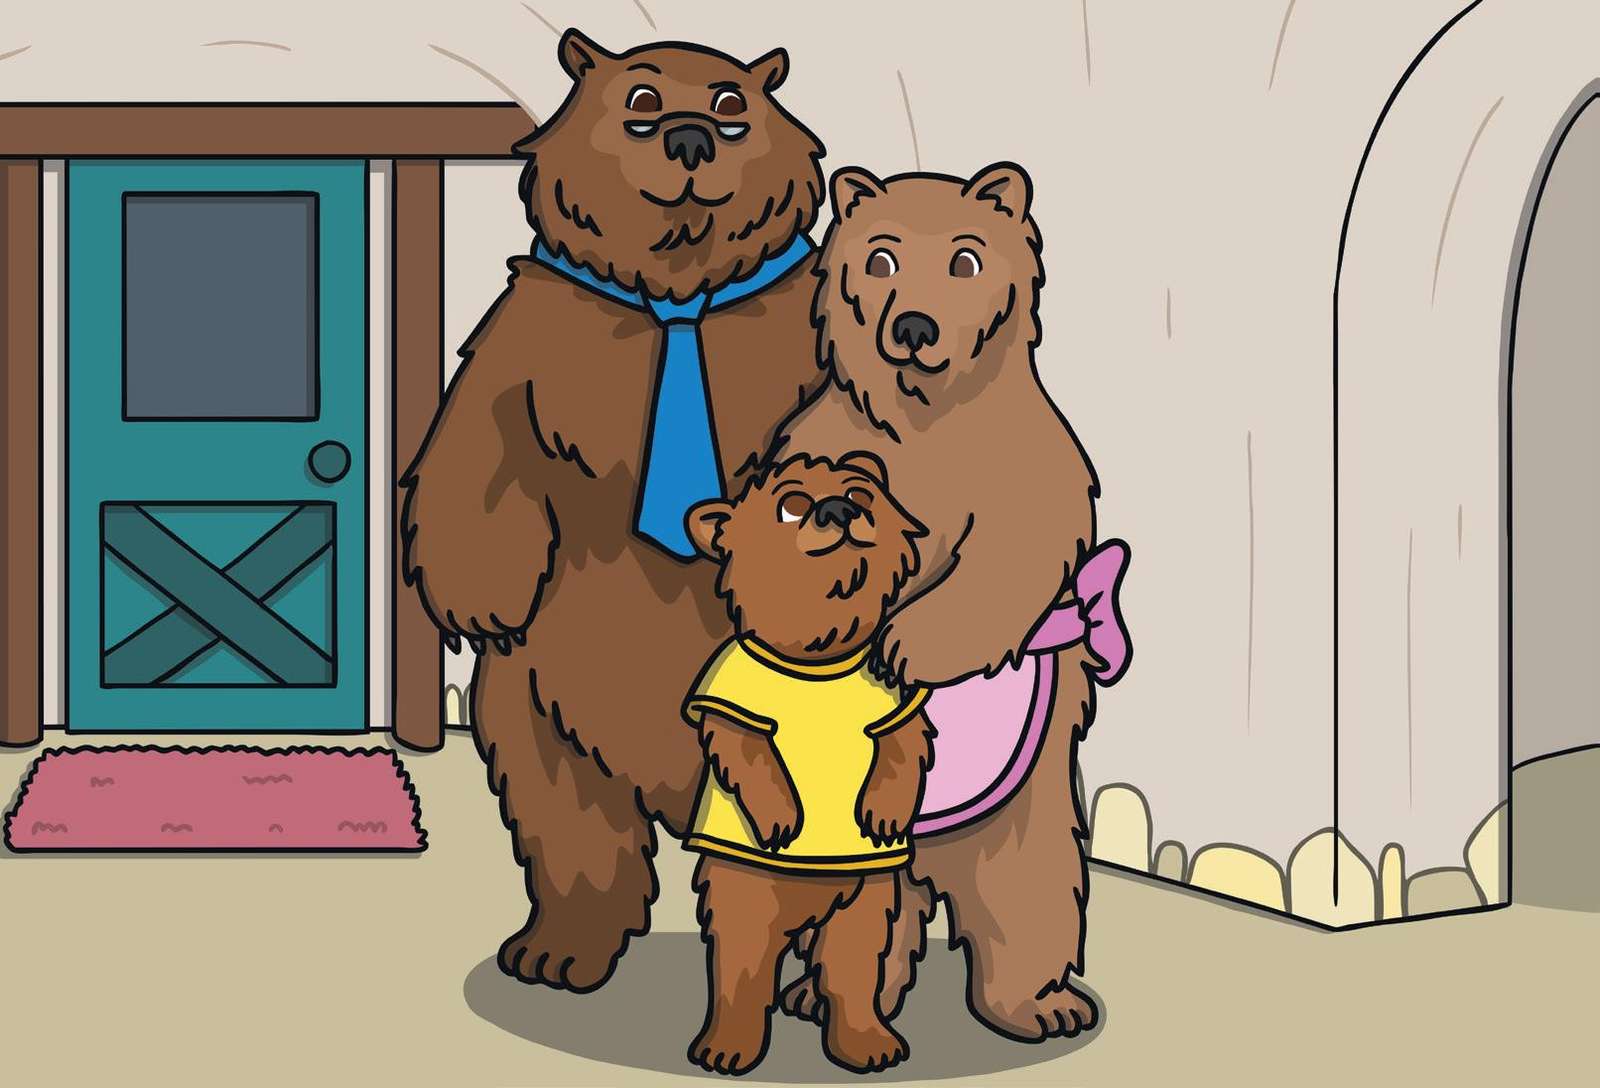 3 bears (Goldilocks) puzzle online from photo